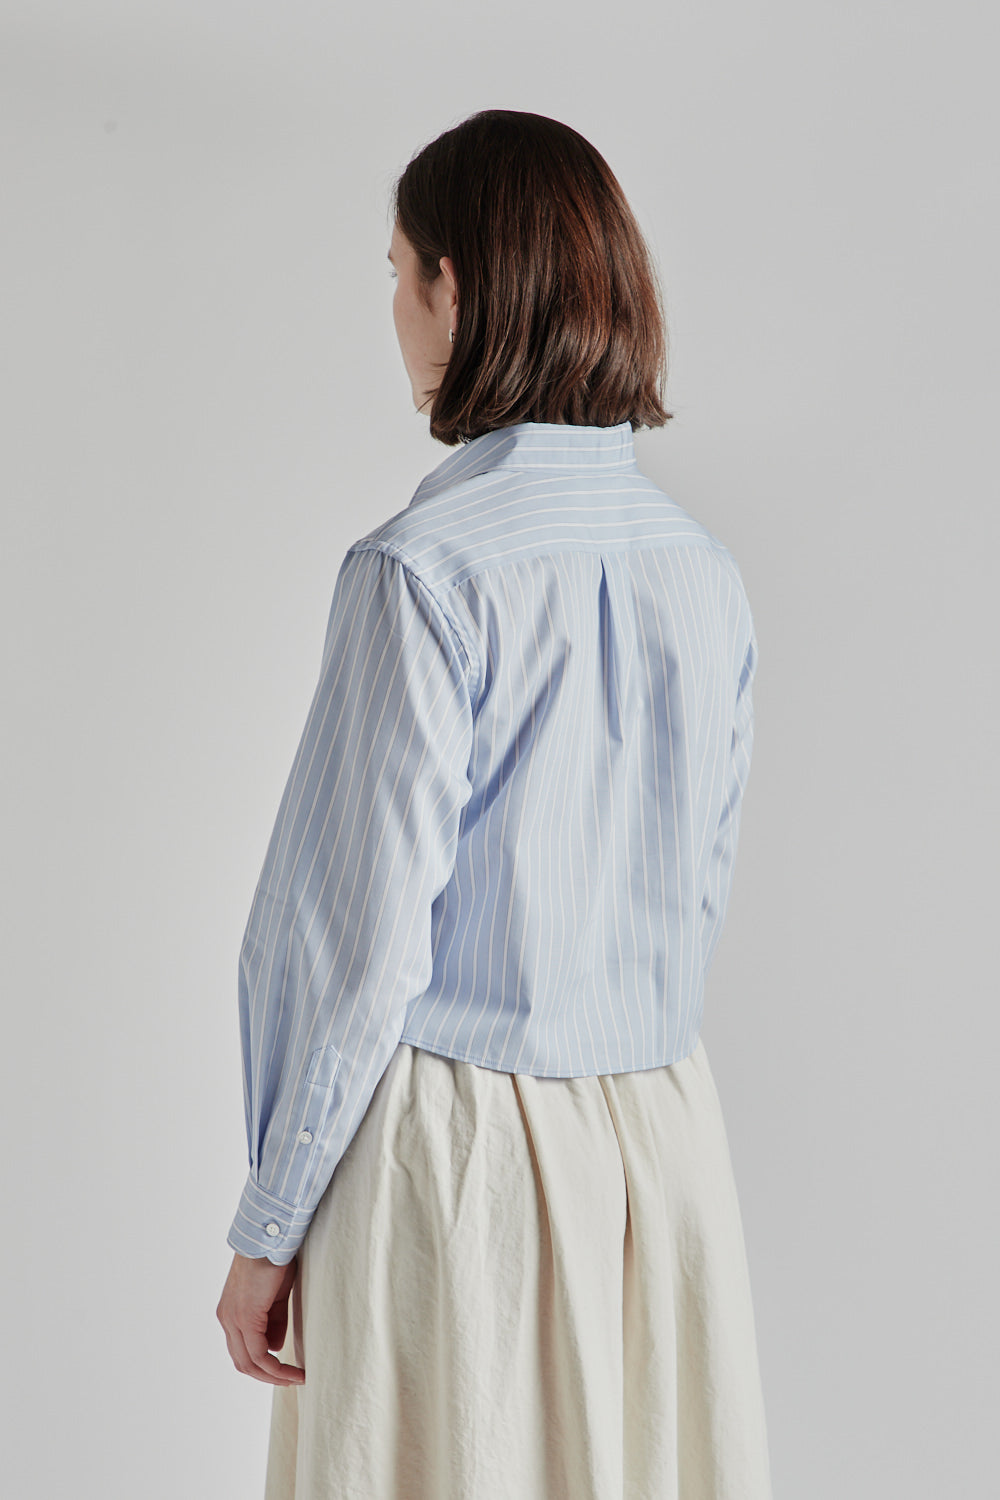 Blurhms Stripe Short Shirt in Saxe/White